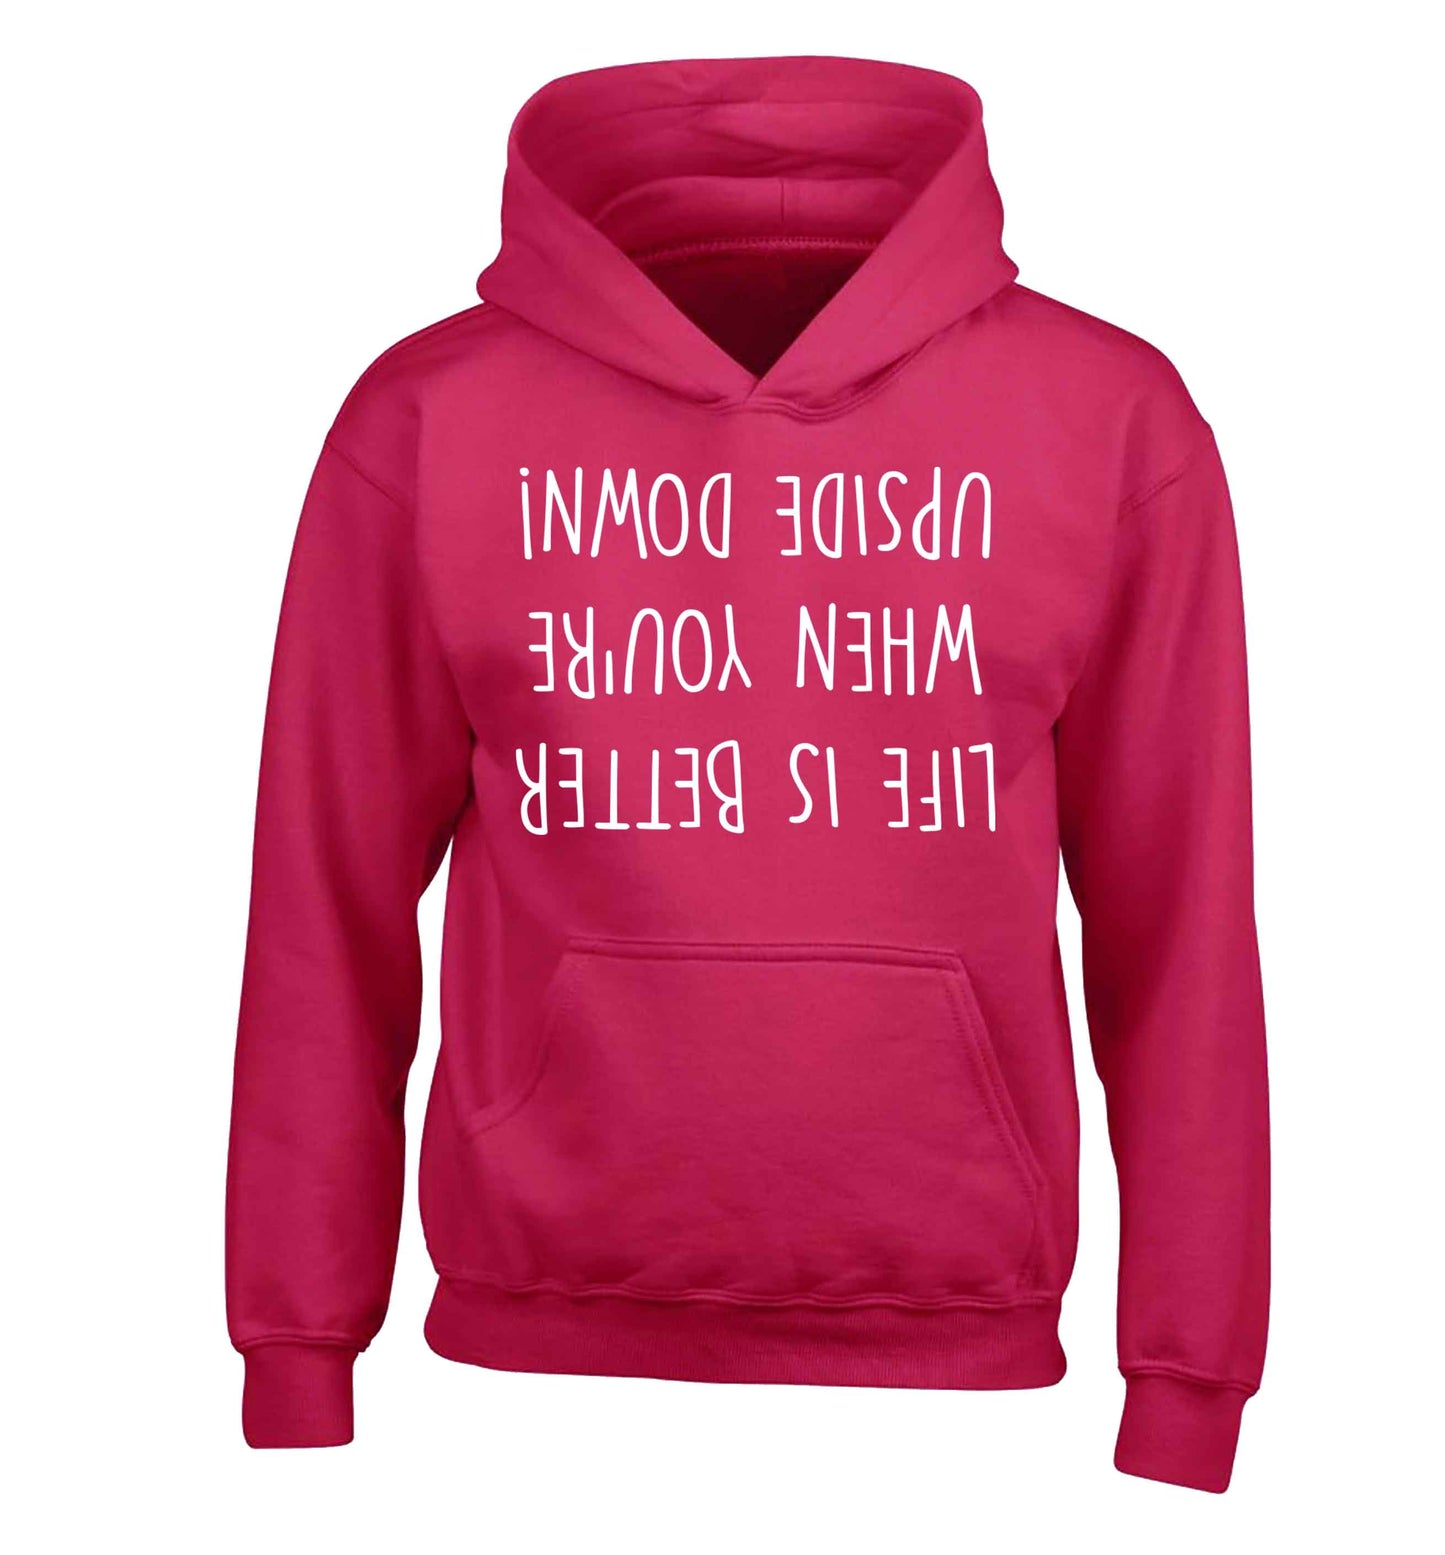 Life is better upside down children's pink hoodie 12-13 Years